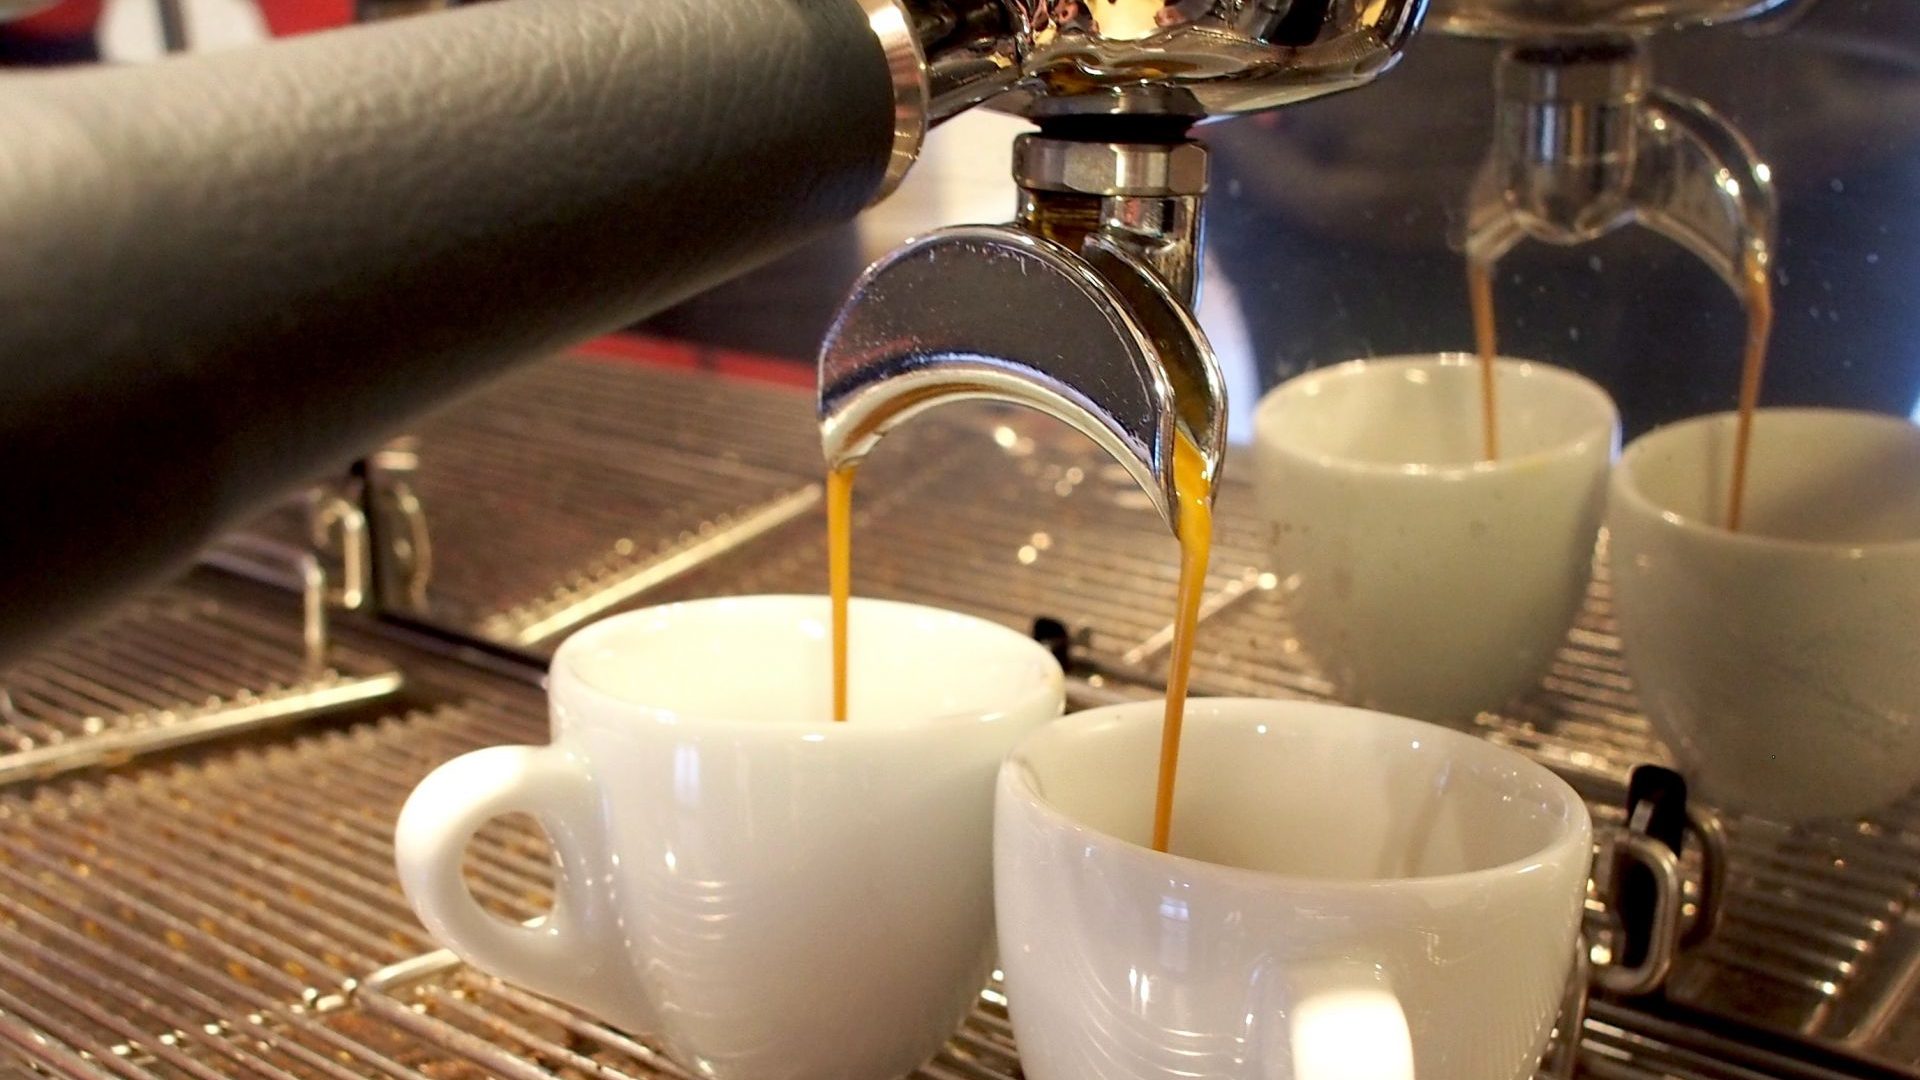 kaffee-siebtraeger-maschine-cupping-schulung